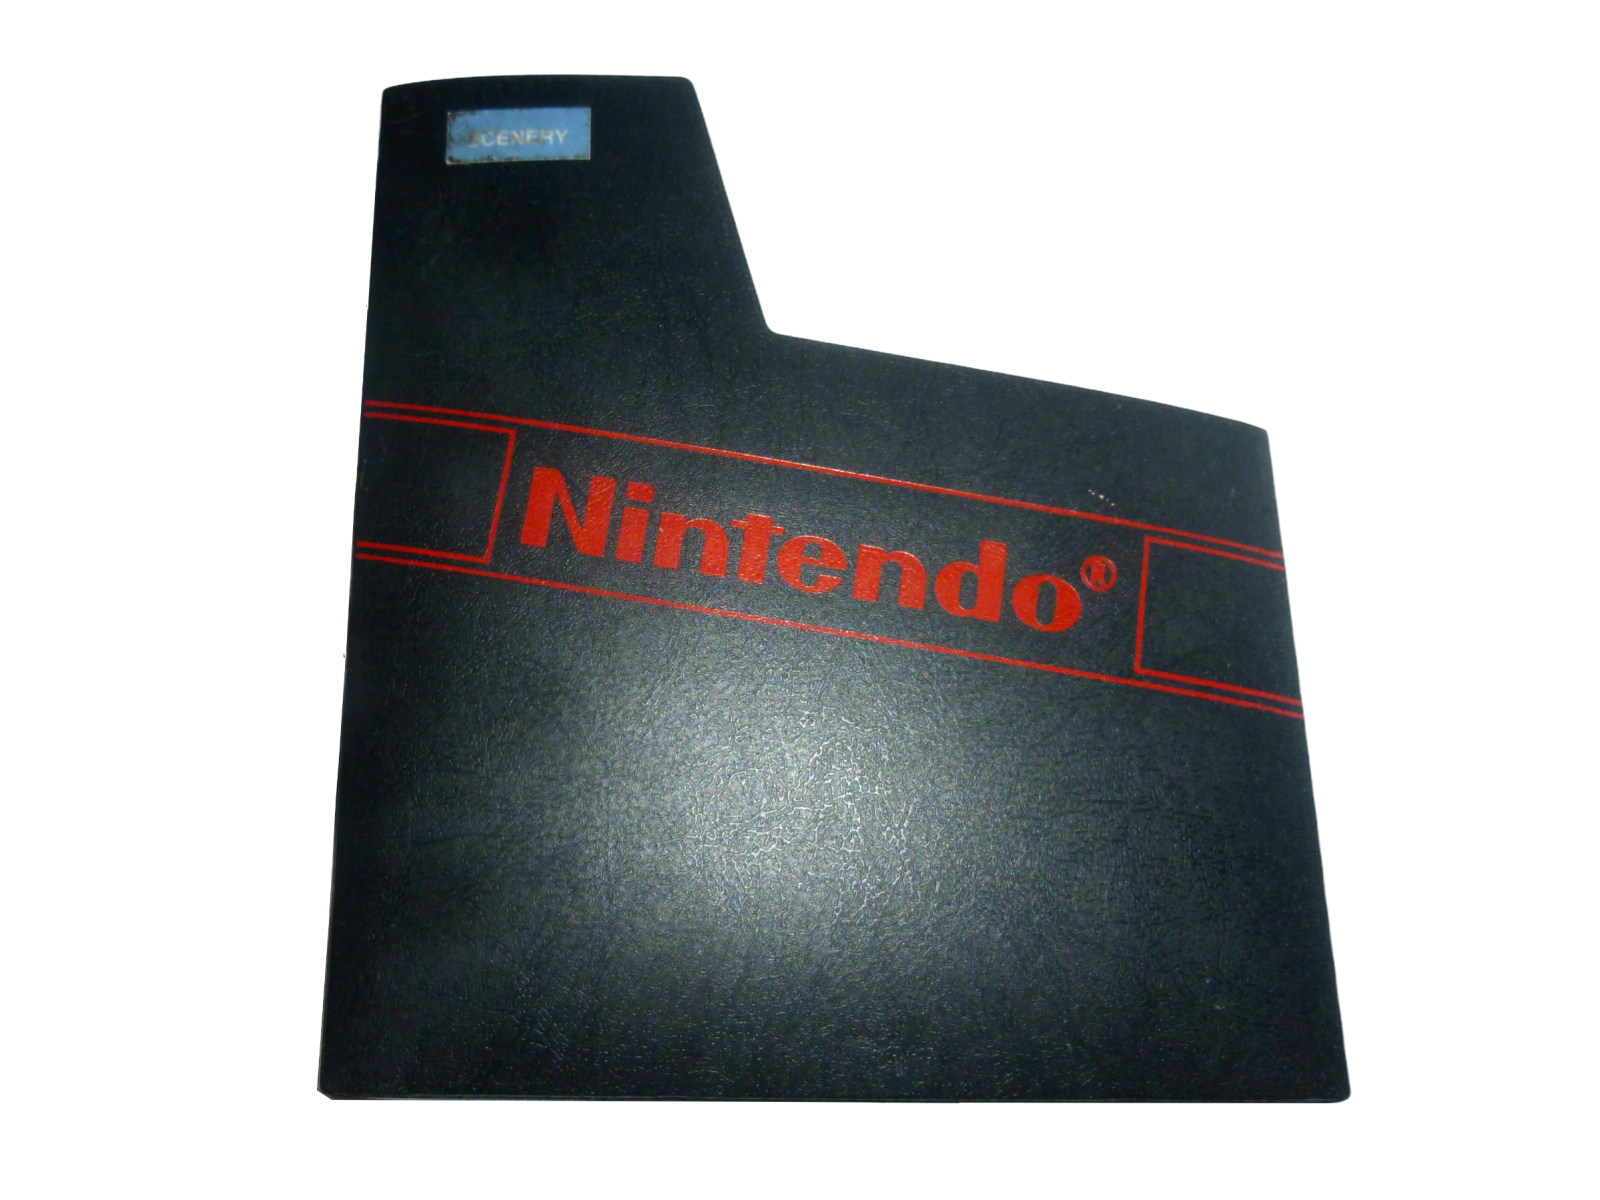 Nintendo NES Schutzhülle